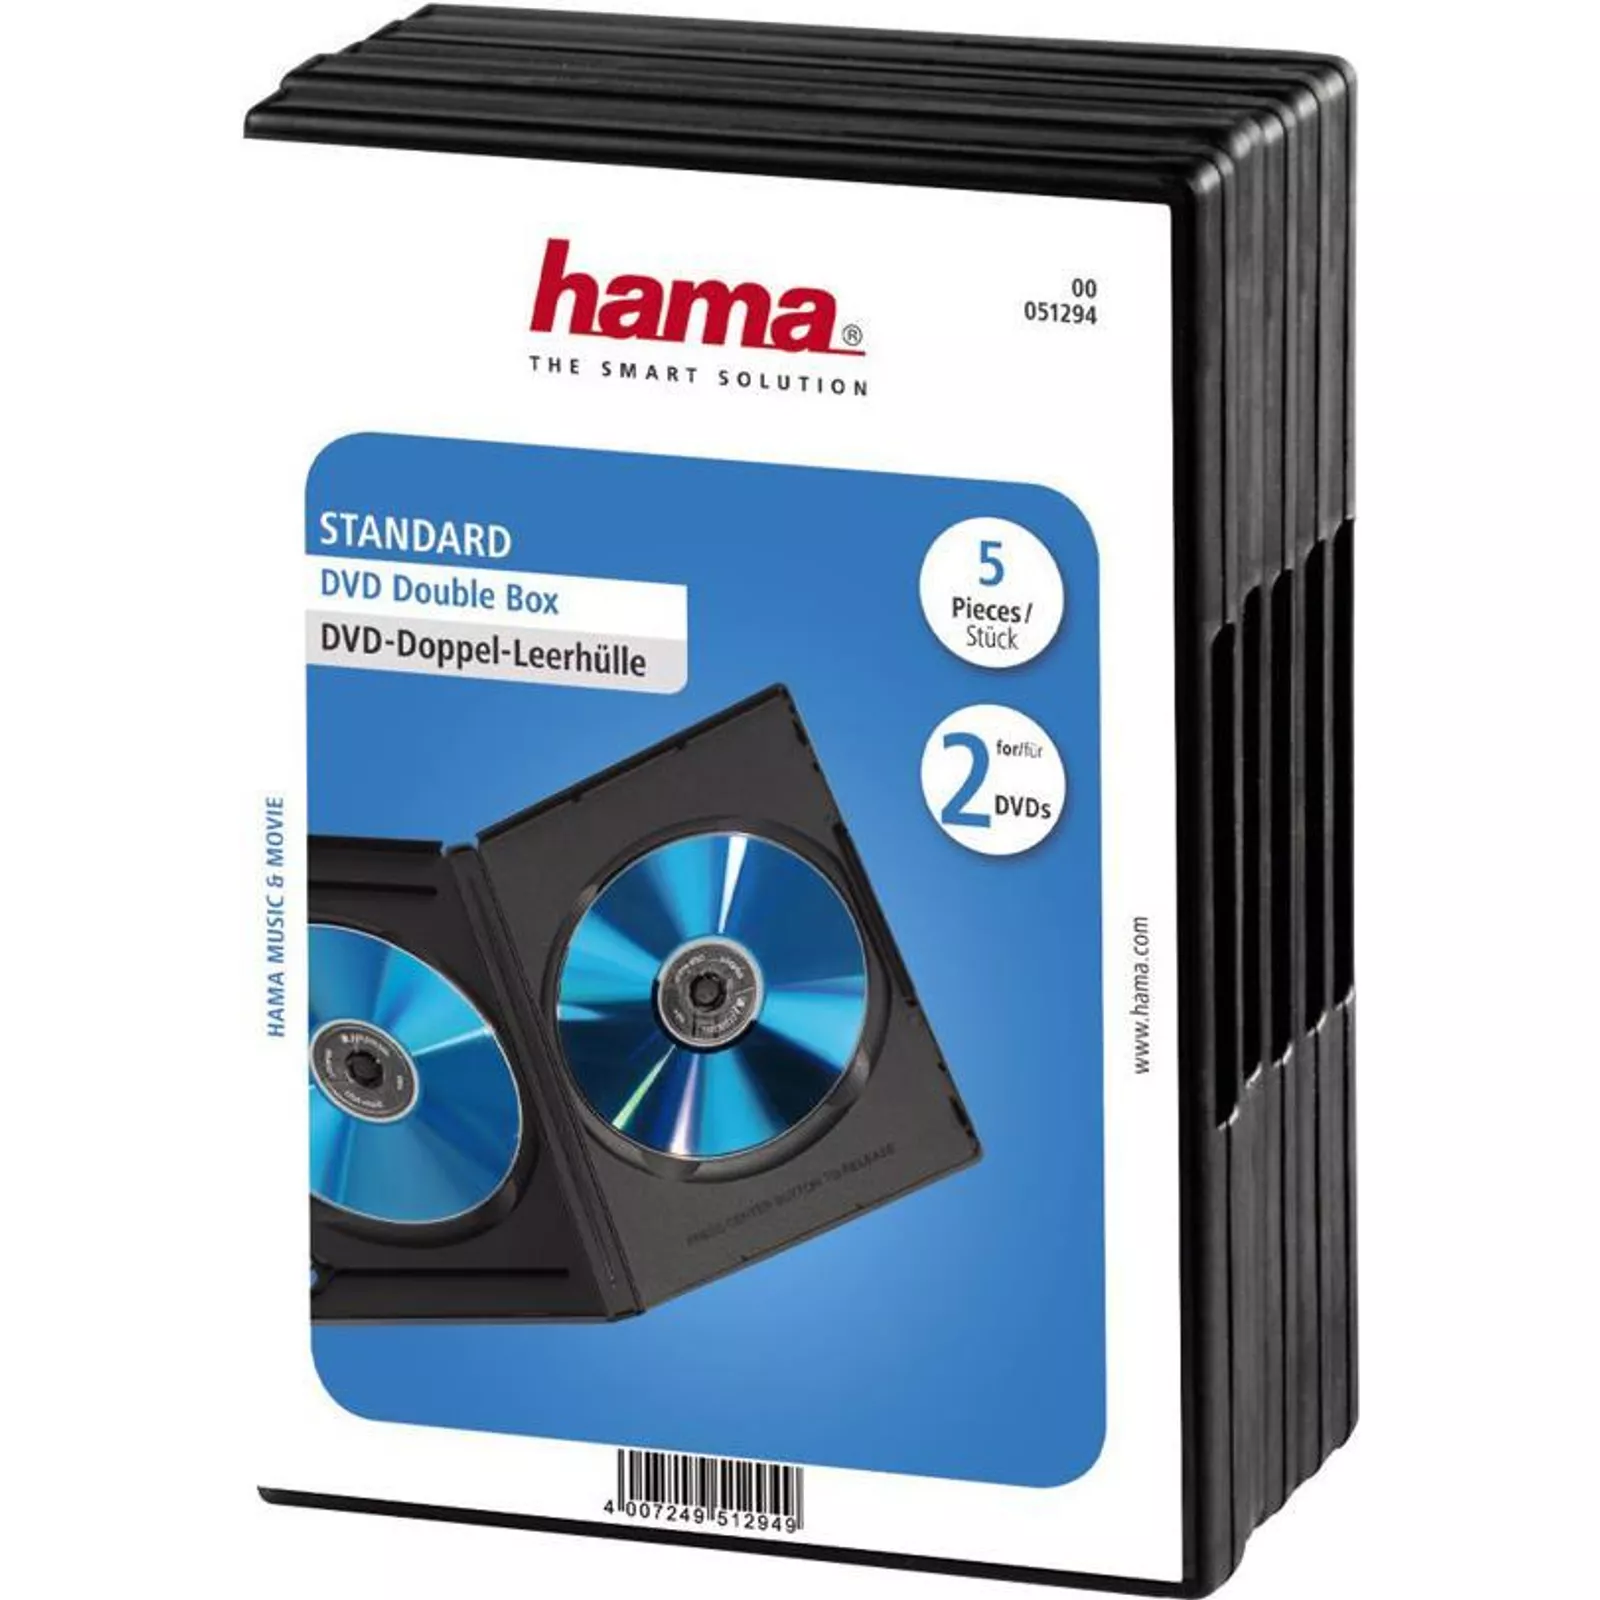 Hama DVD-DOP.LEERH.SC 5 St 51294